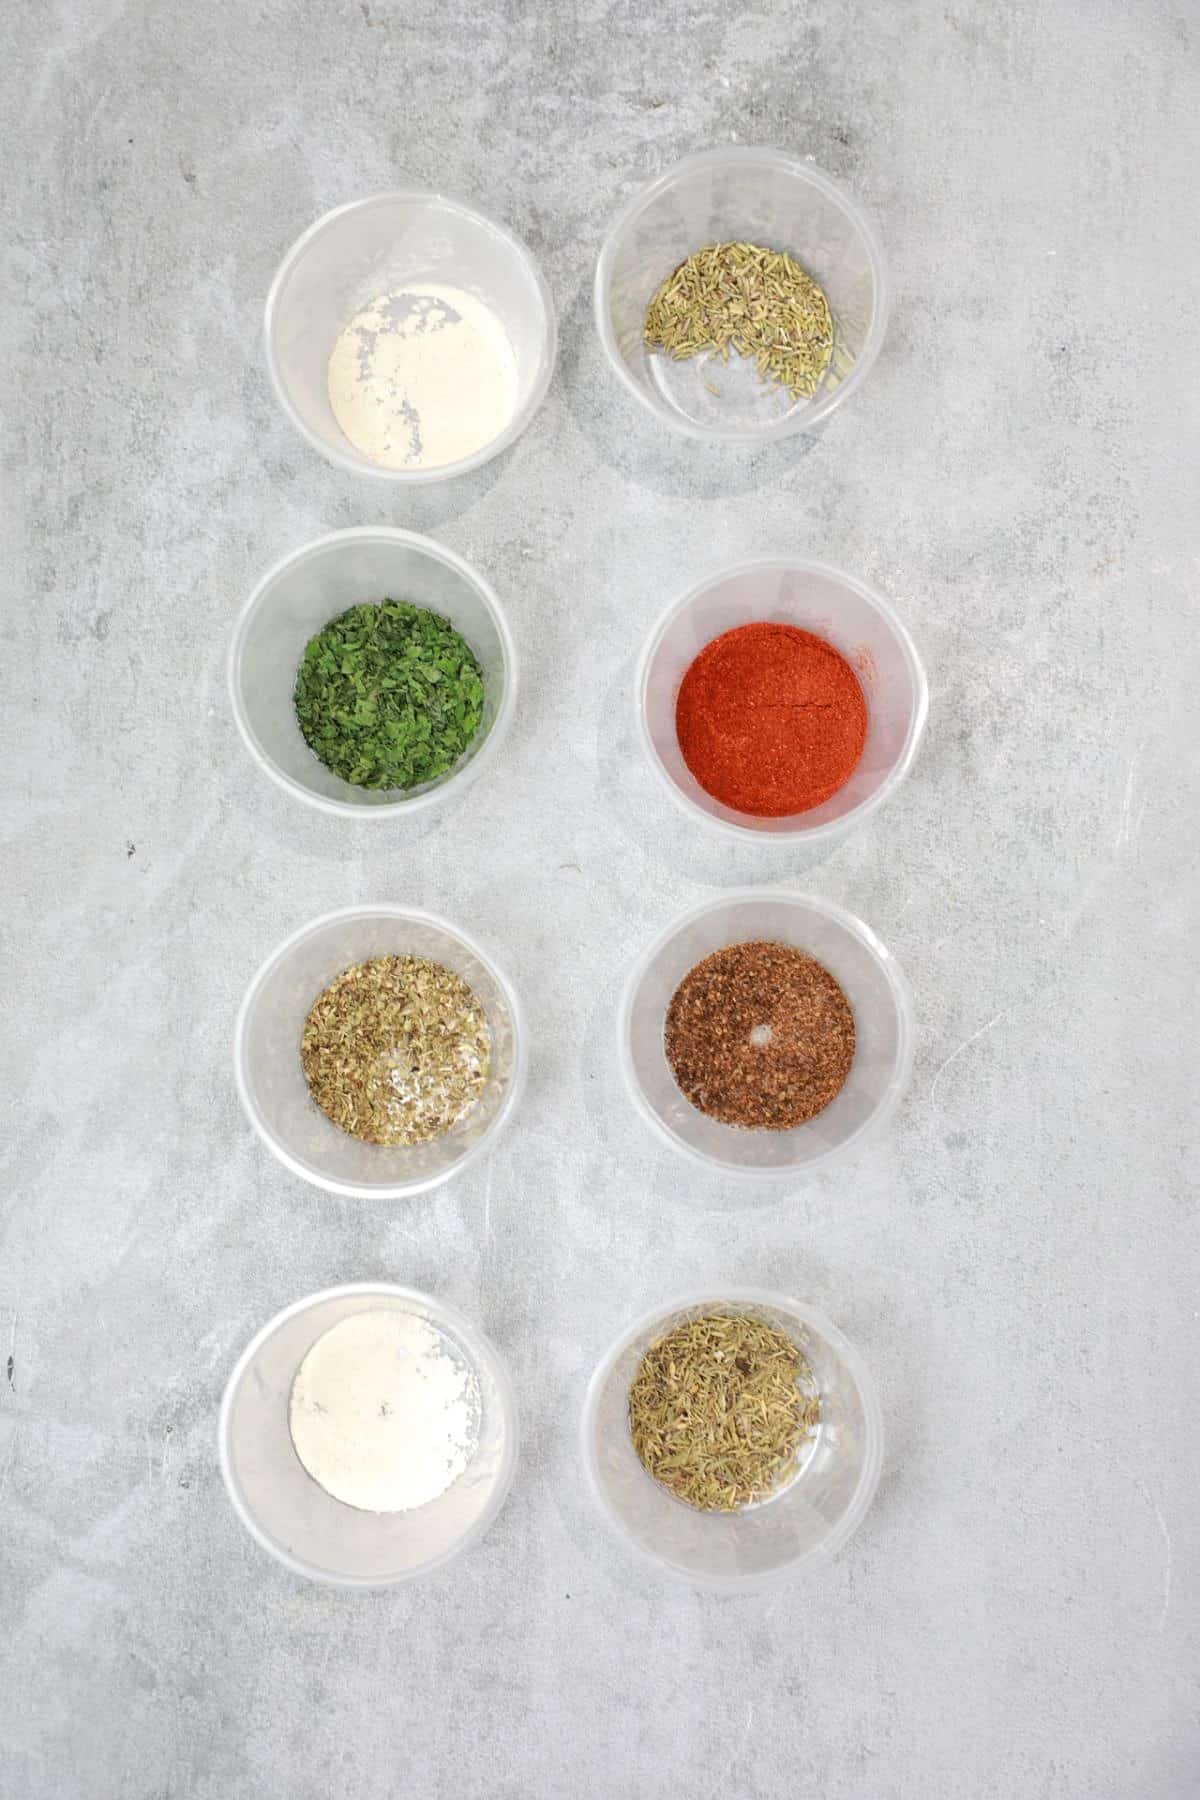 ingredients for the seasoning displayed.